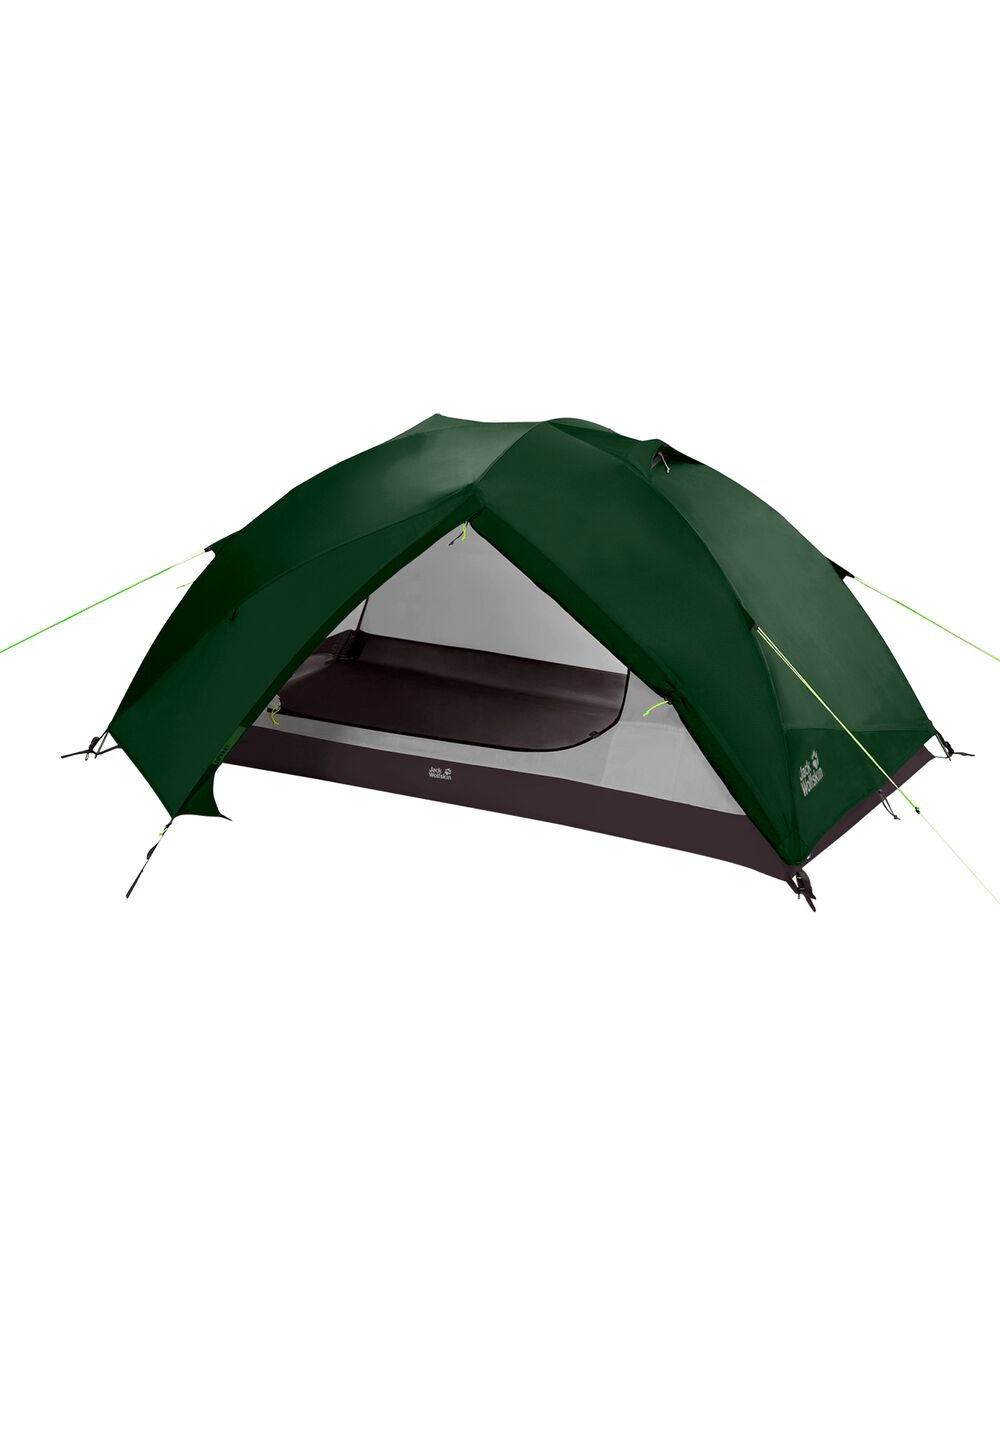 Tente coupole Skyrocket II-Personen Dome one size vert mountain green